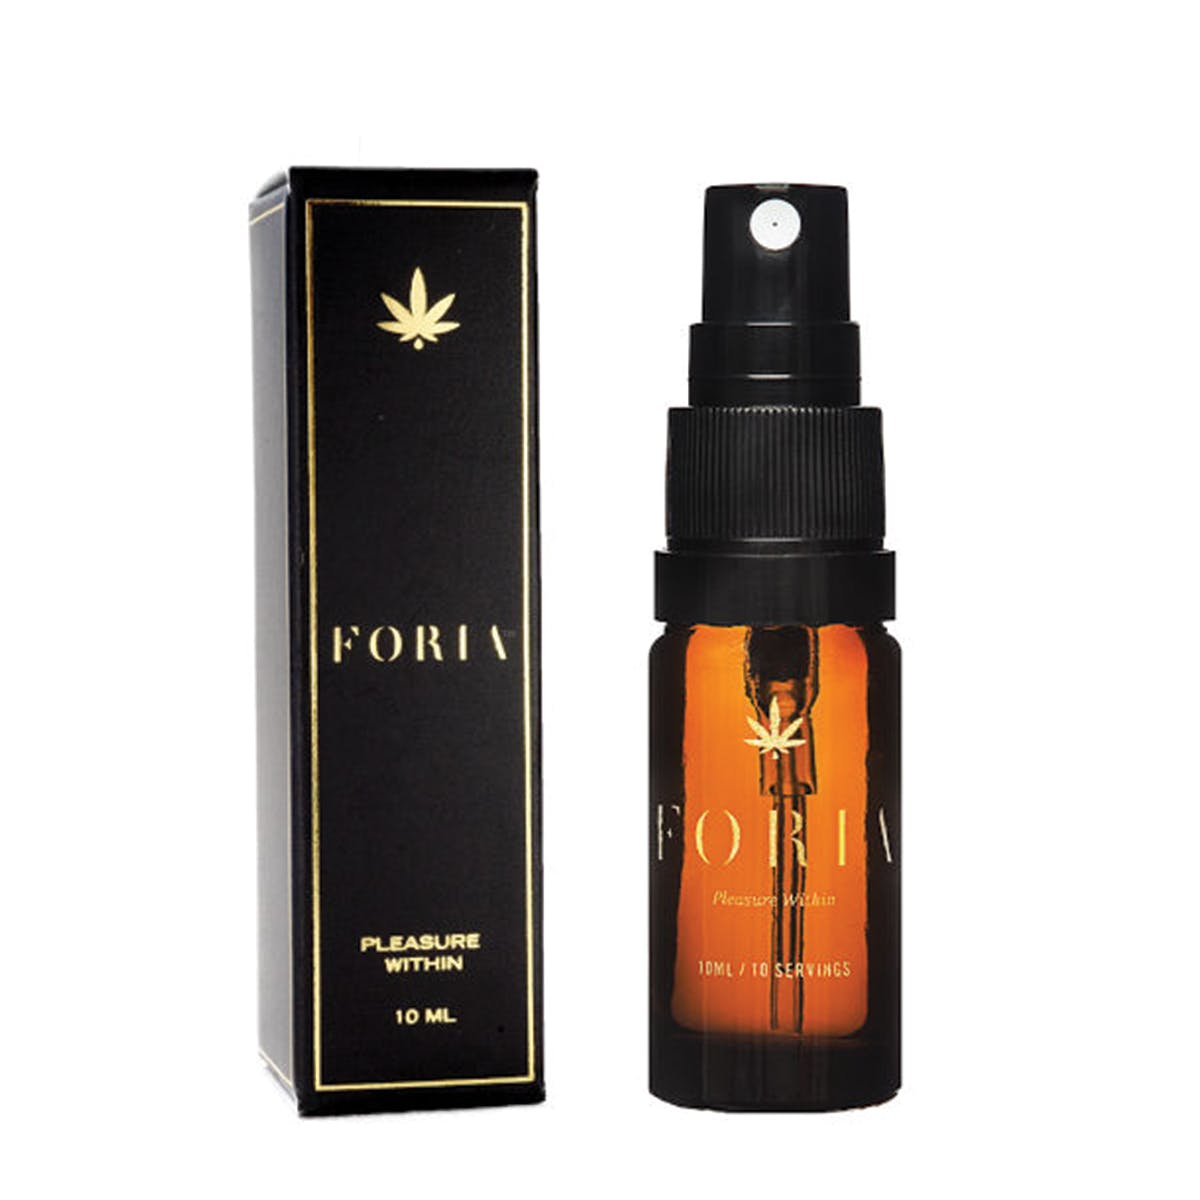 marijuana-dispensaries-magnolia-road-cannabis-co-recreational-in-boulder-foria-pleasure-10ml-spray-bottle